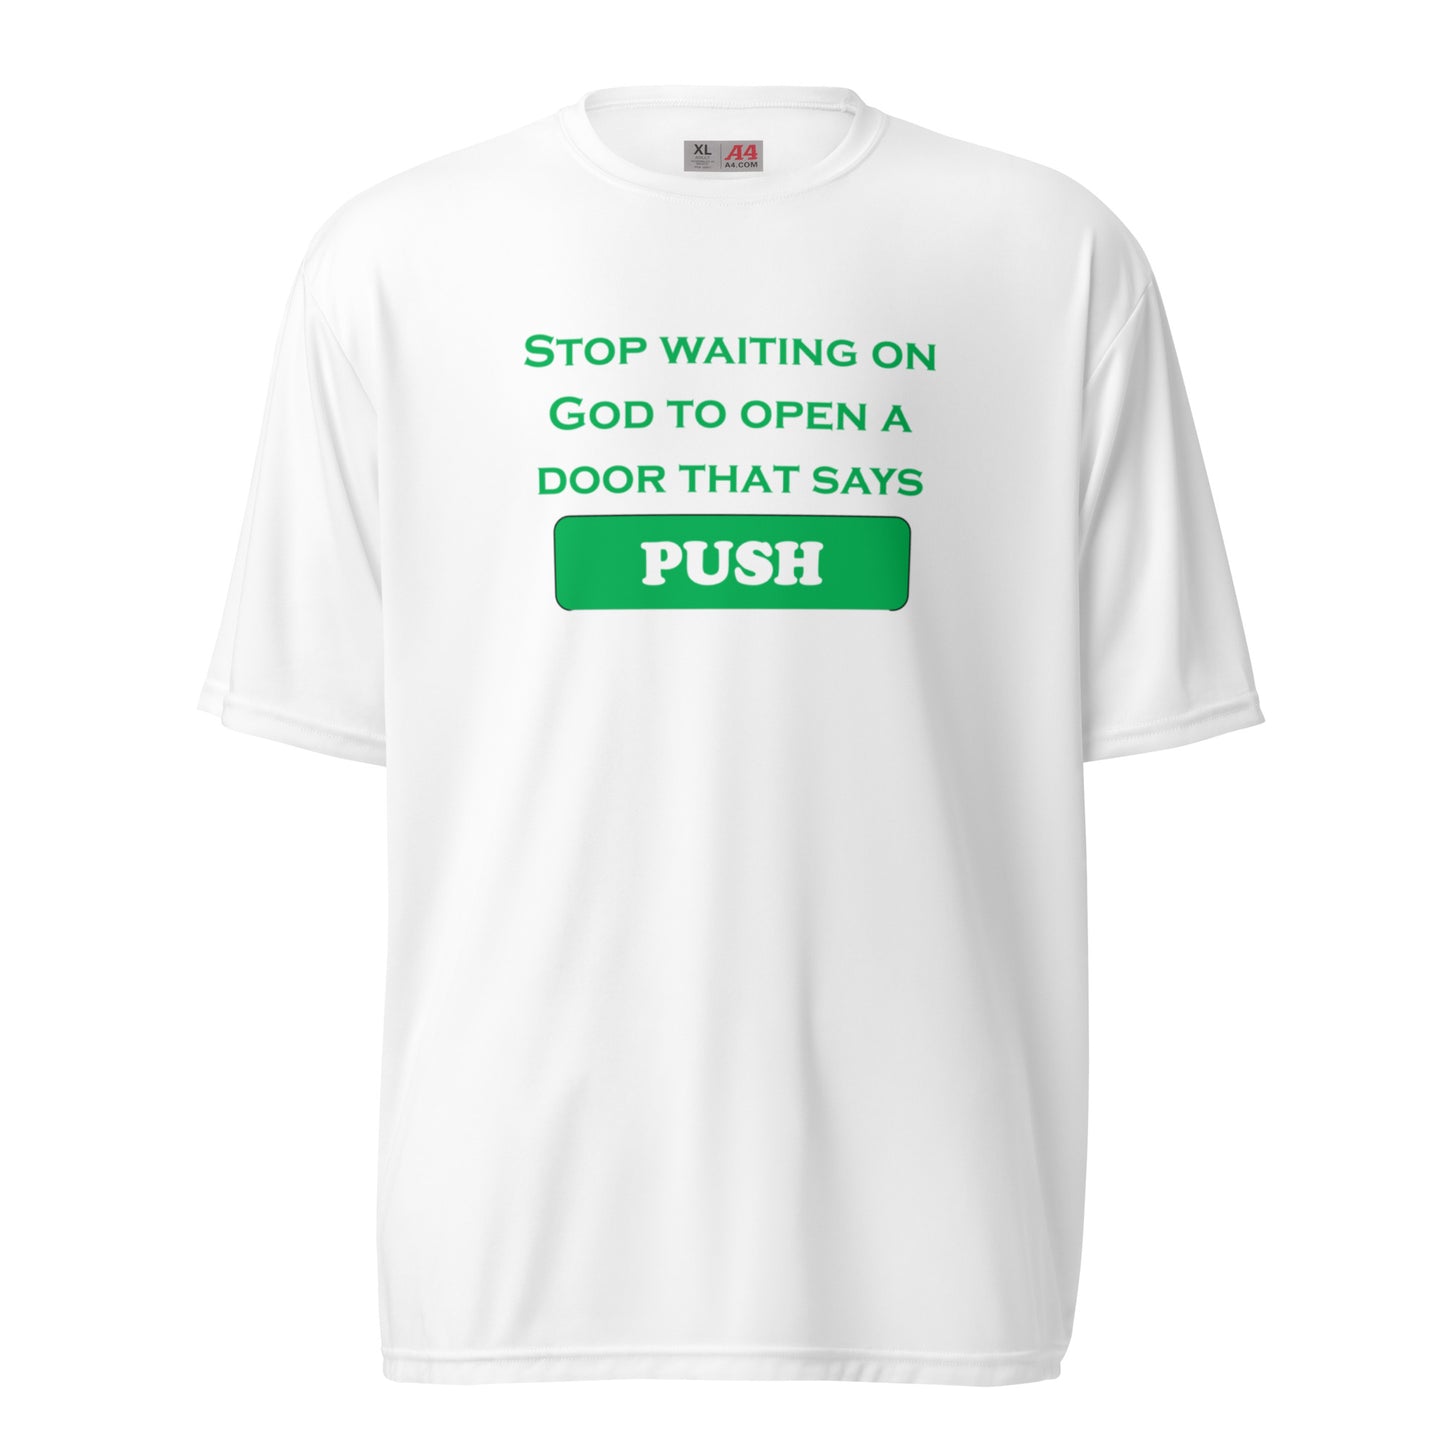 Stop Waiting on God to Open a Door unisex performance crew neck t-shirt - Green Print